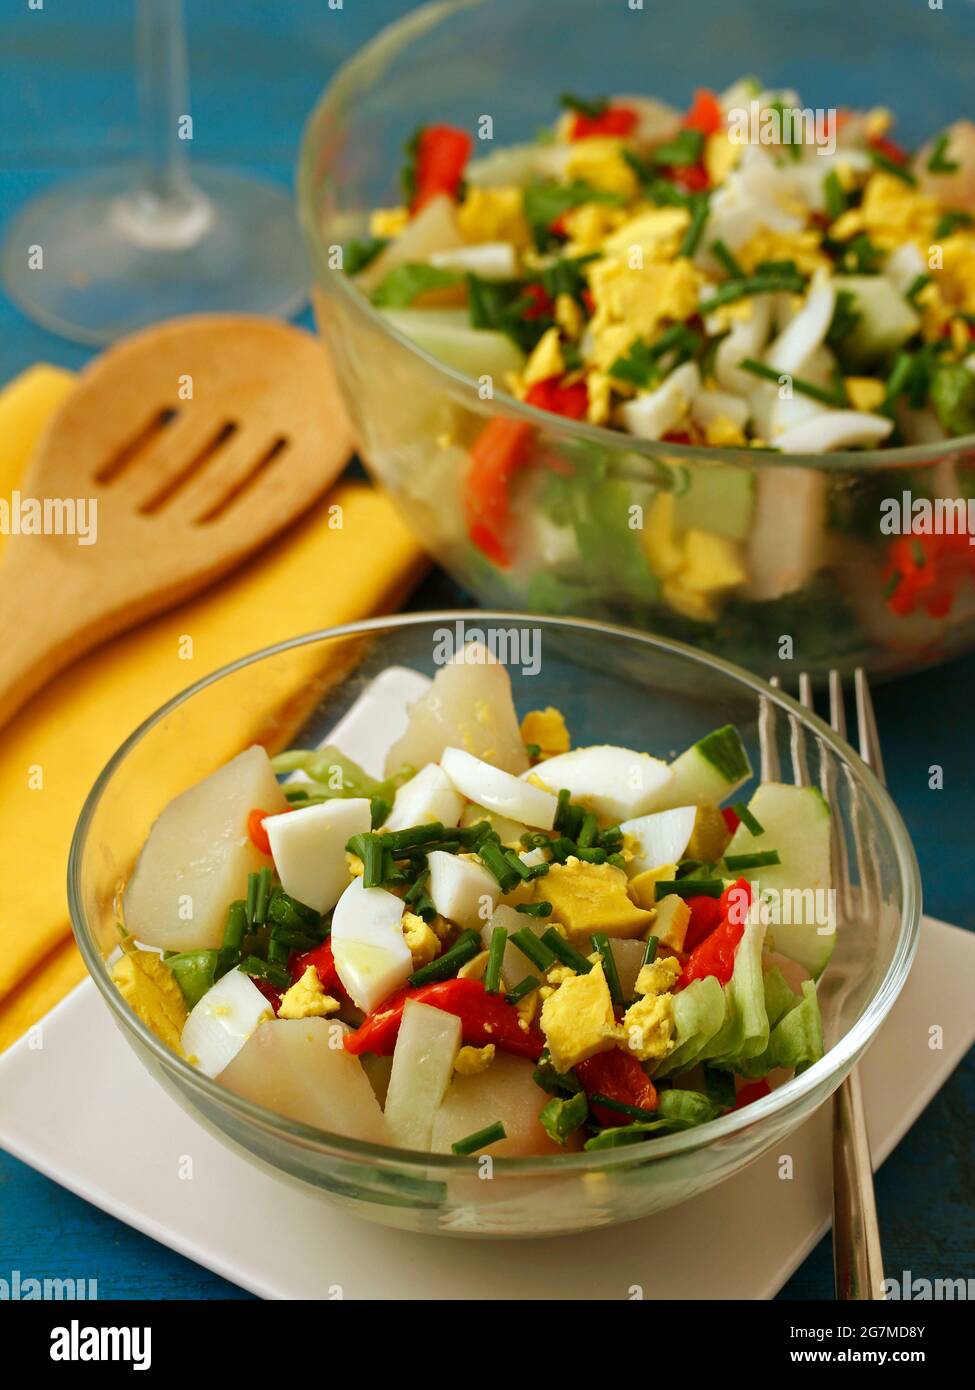 Potatoes salad with veggies and eggs. Stock Photo